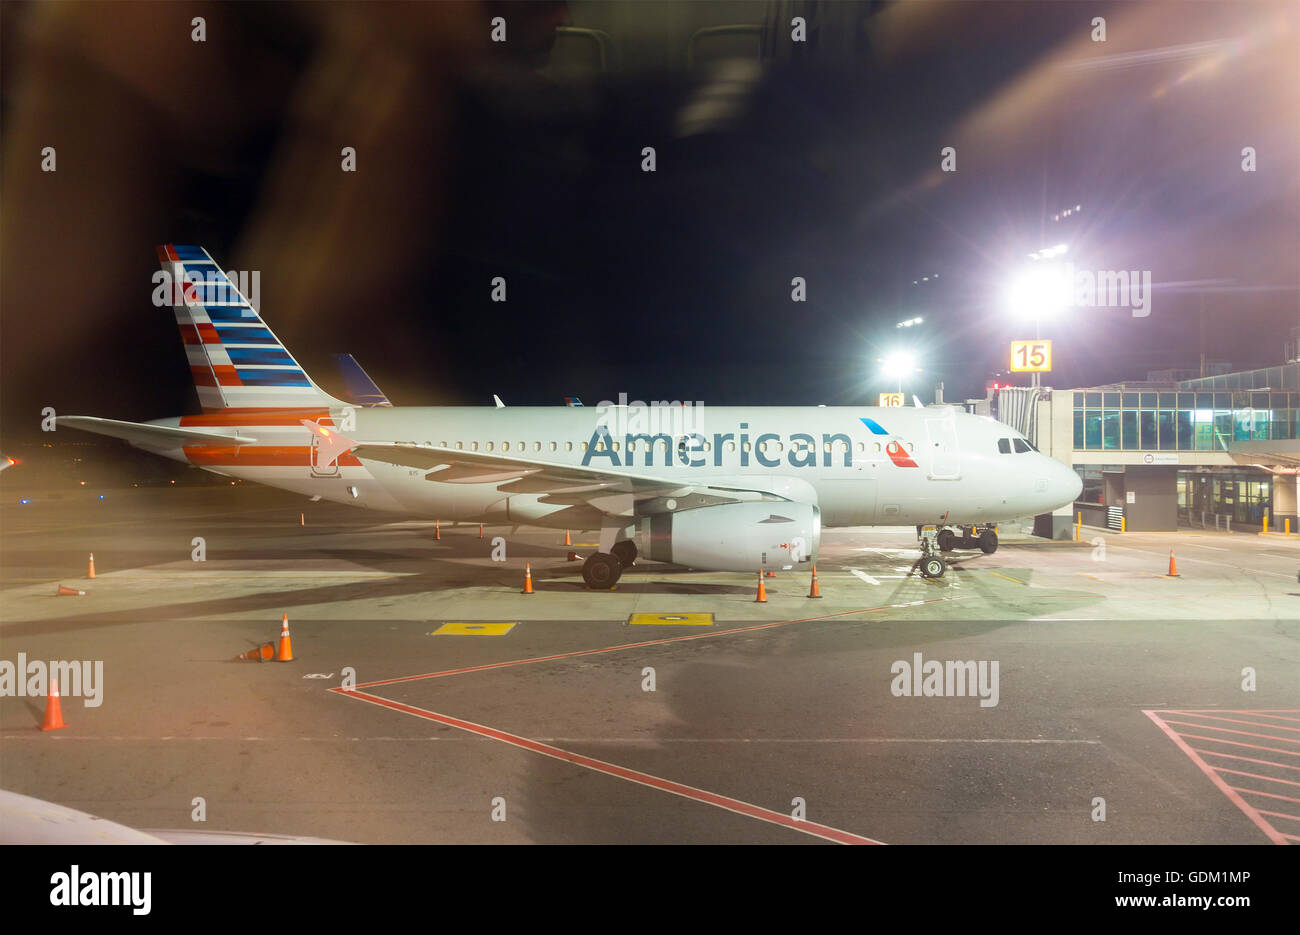 An American Airlines plane at Juan Santamaria International Airport in Costa Rica. Stock Photo